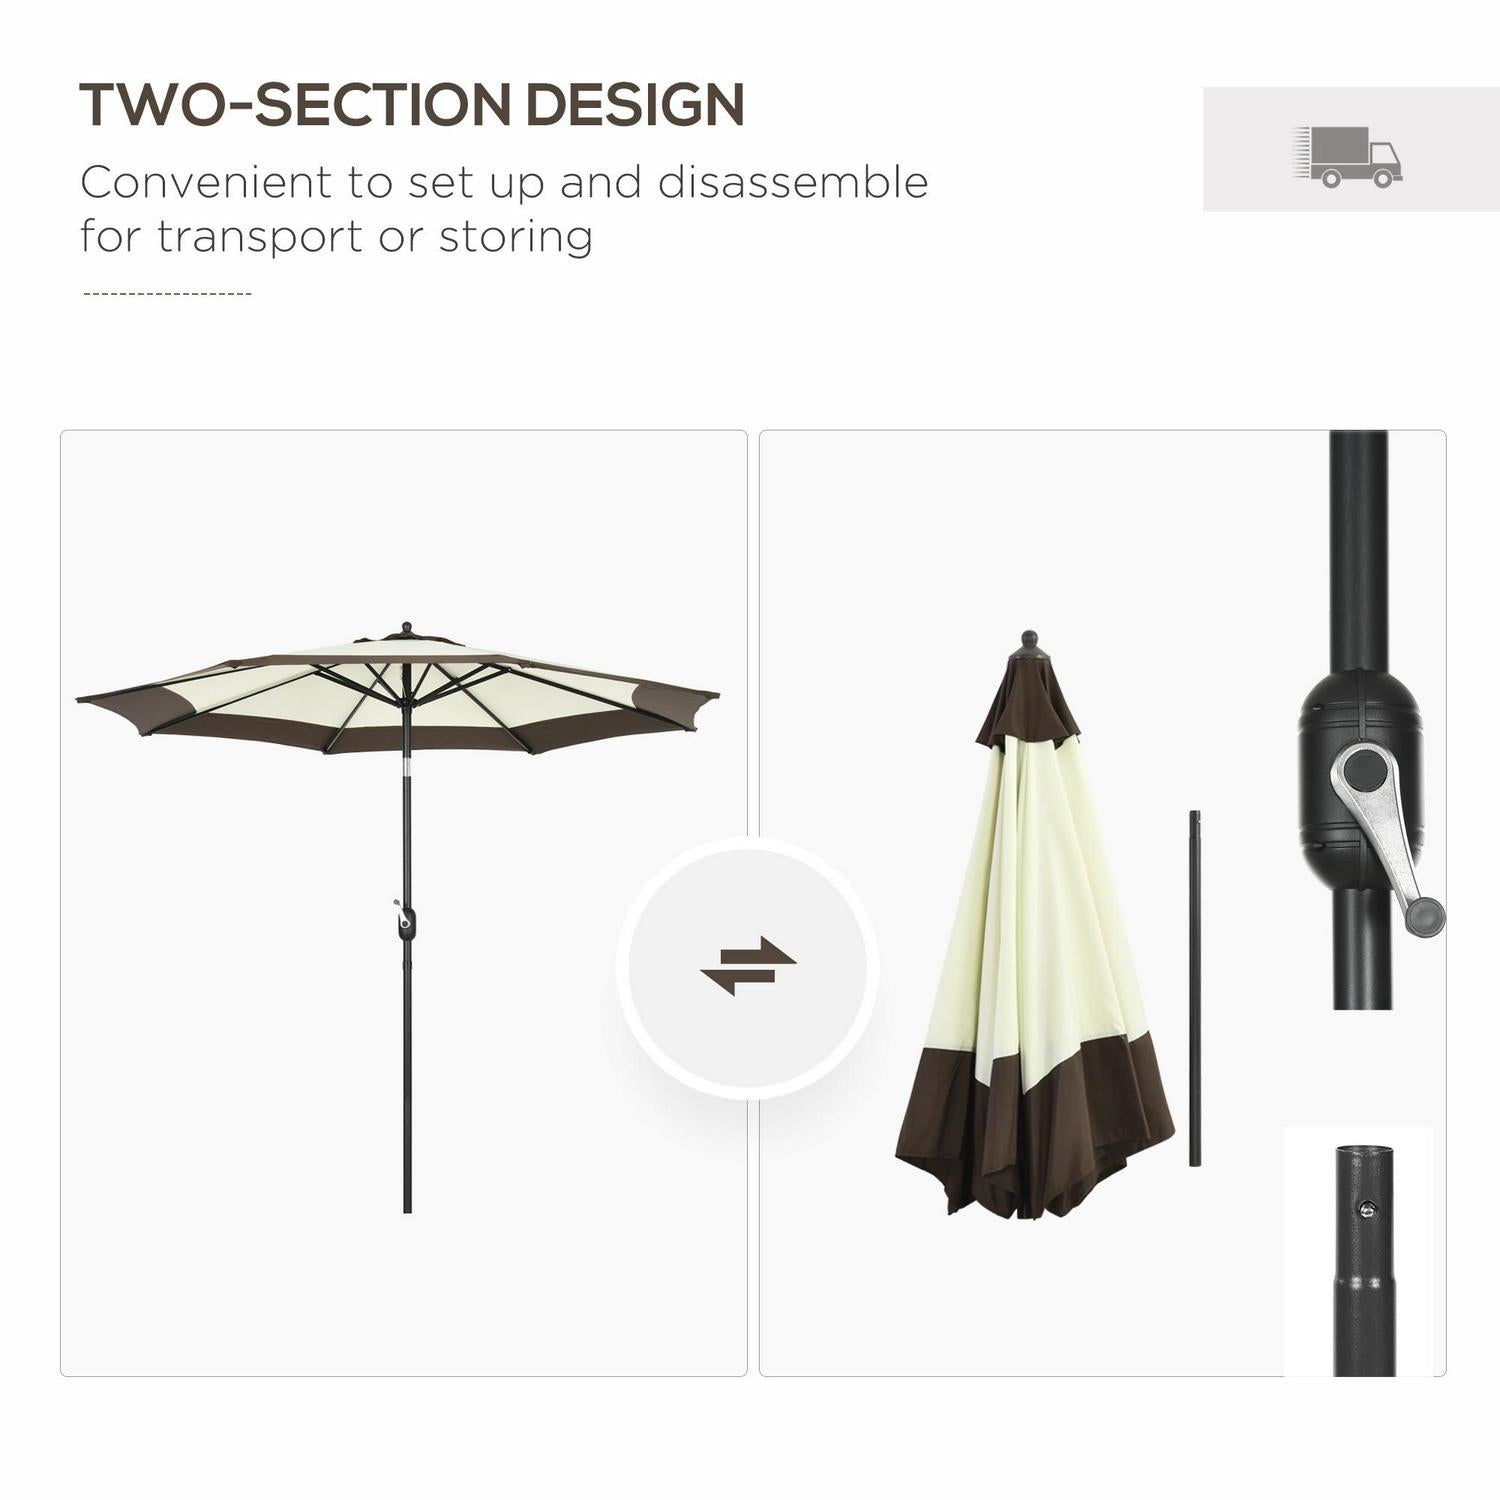 Garden Parasol Umbrella With 8 Metal Ribs- Coffee